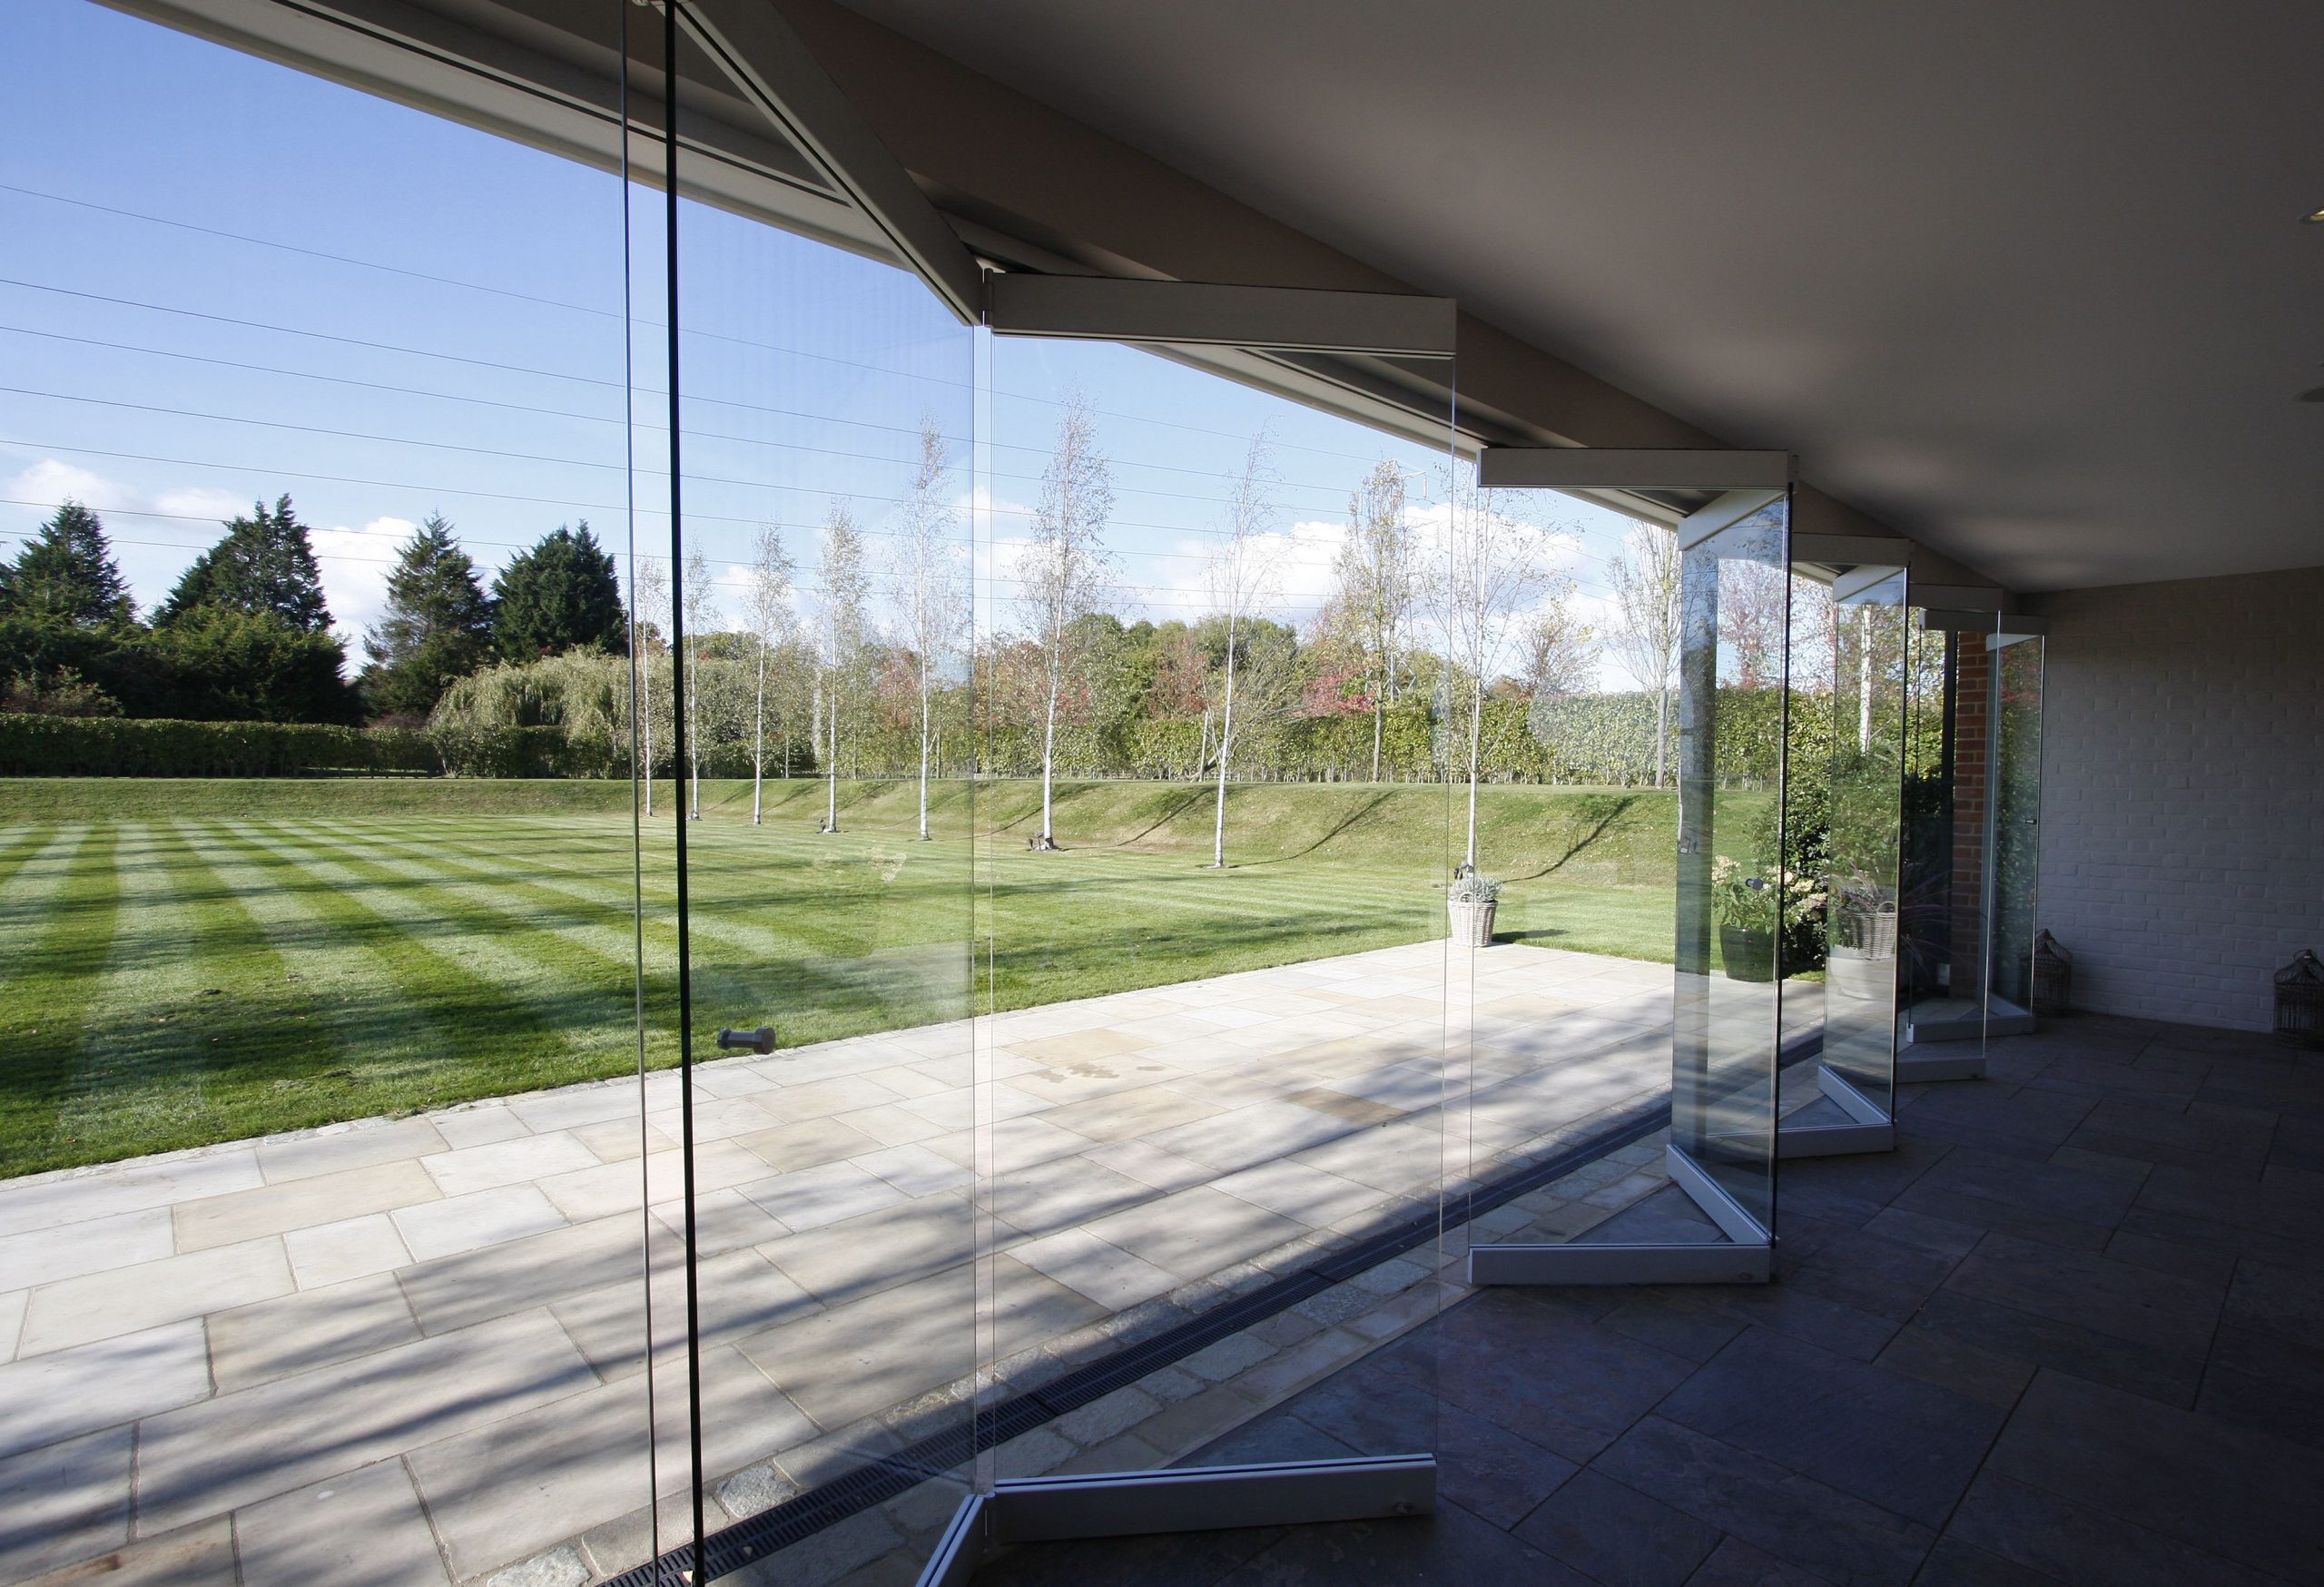 Frameless Sliding Glass Doors – Add Style With Versatility